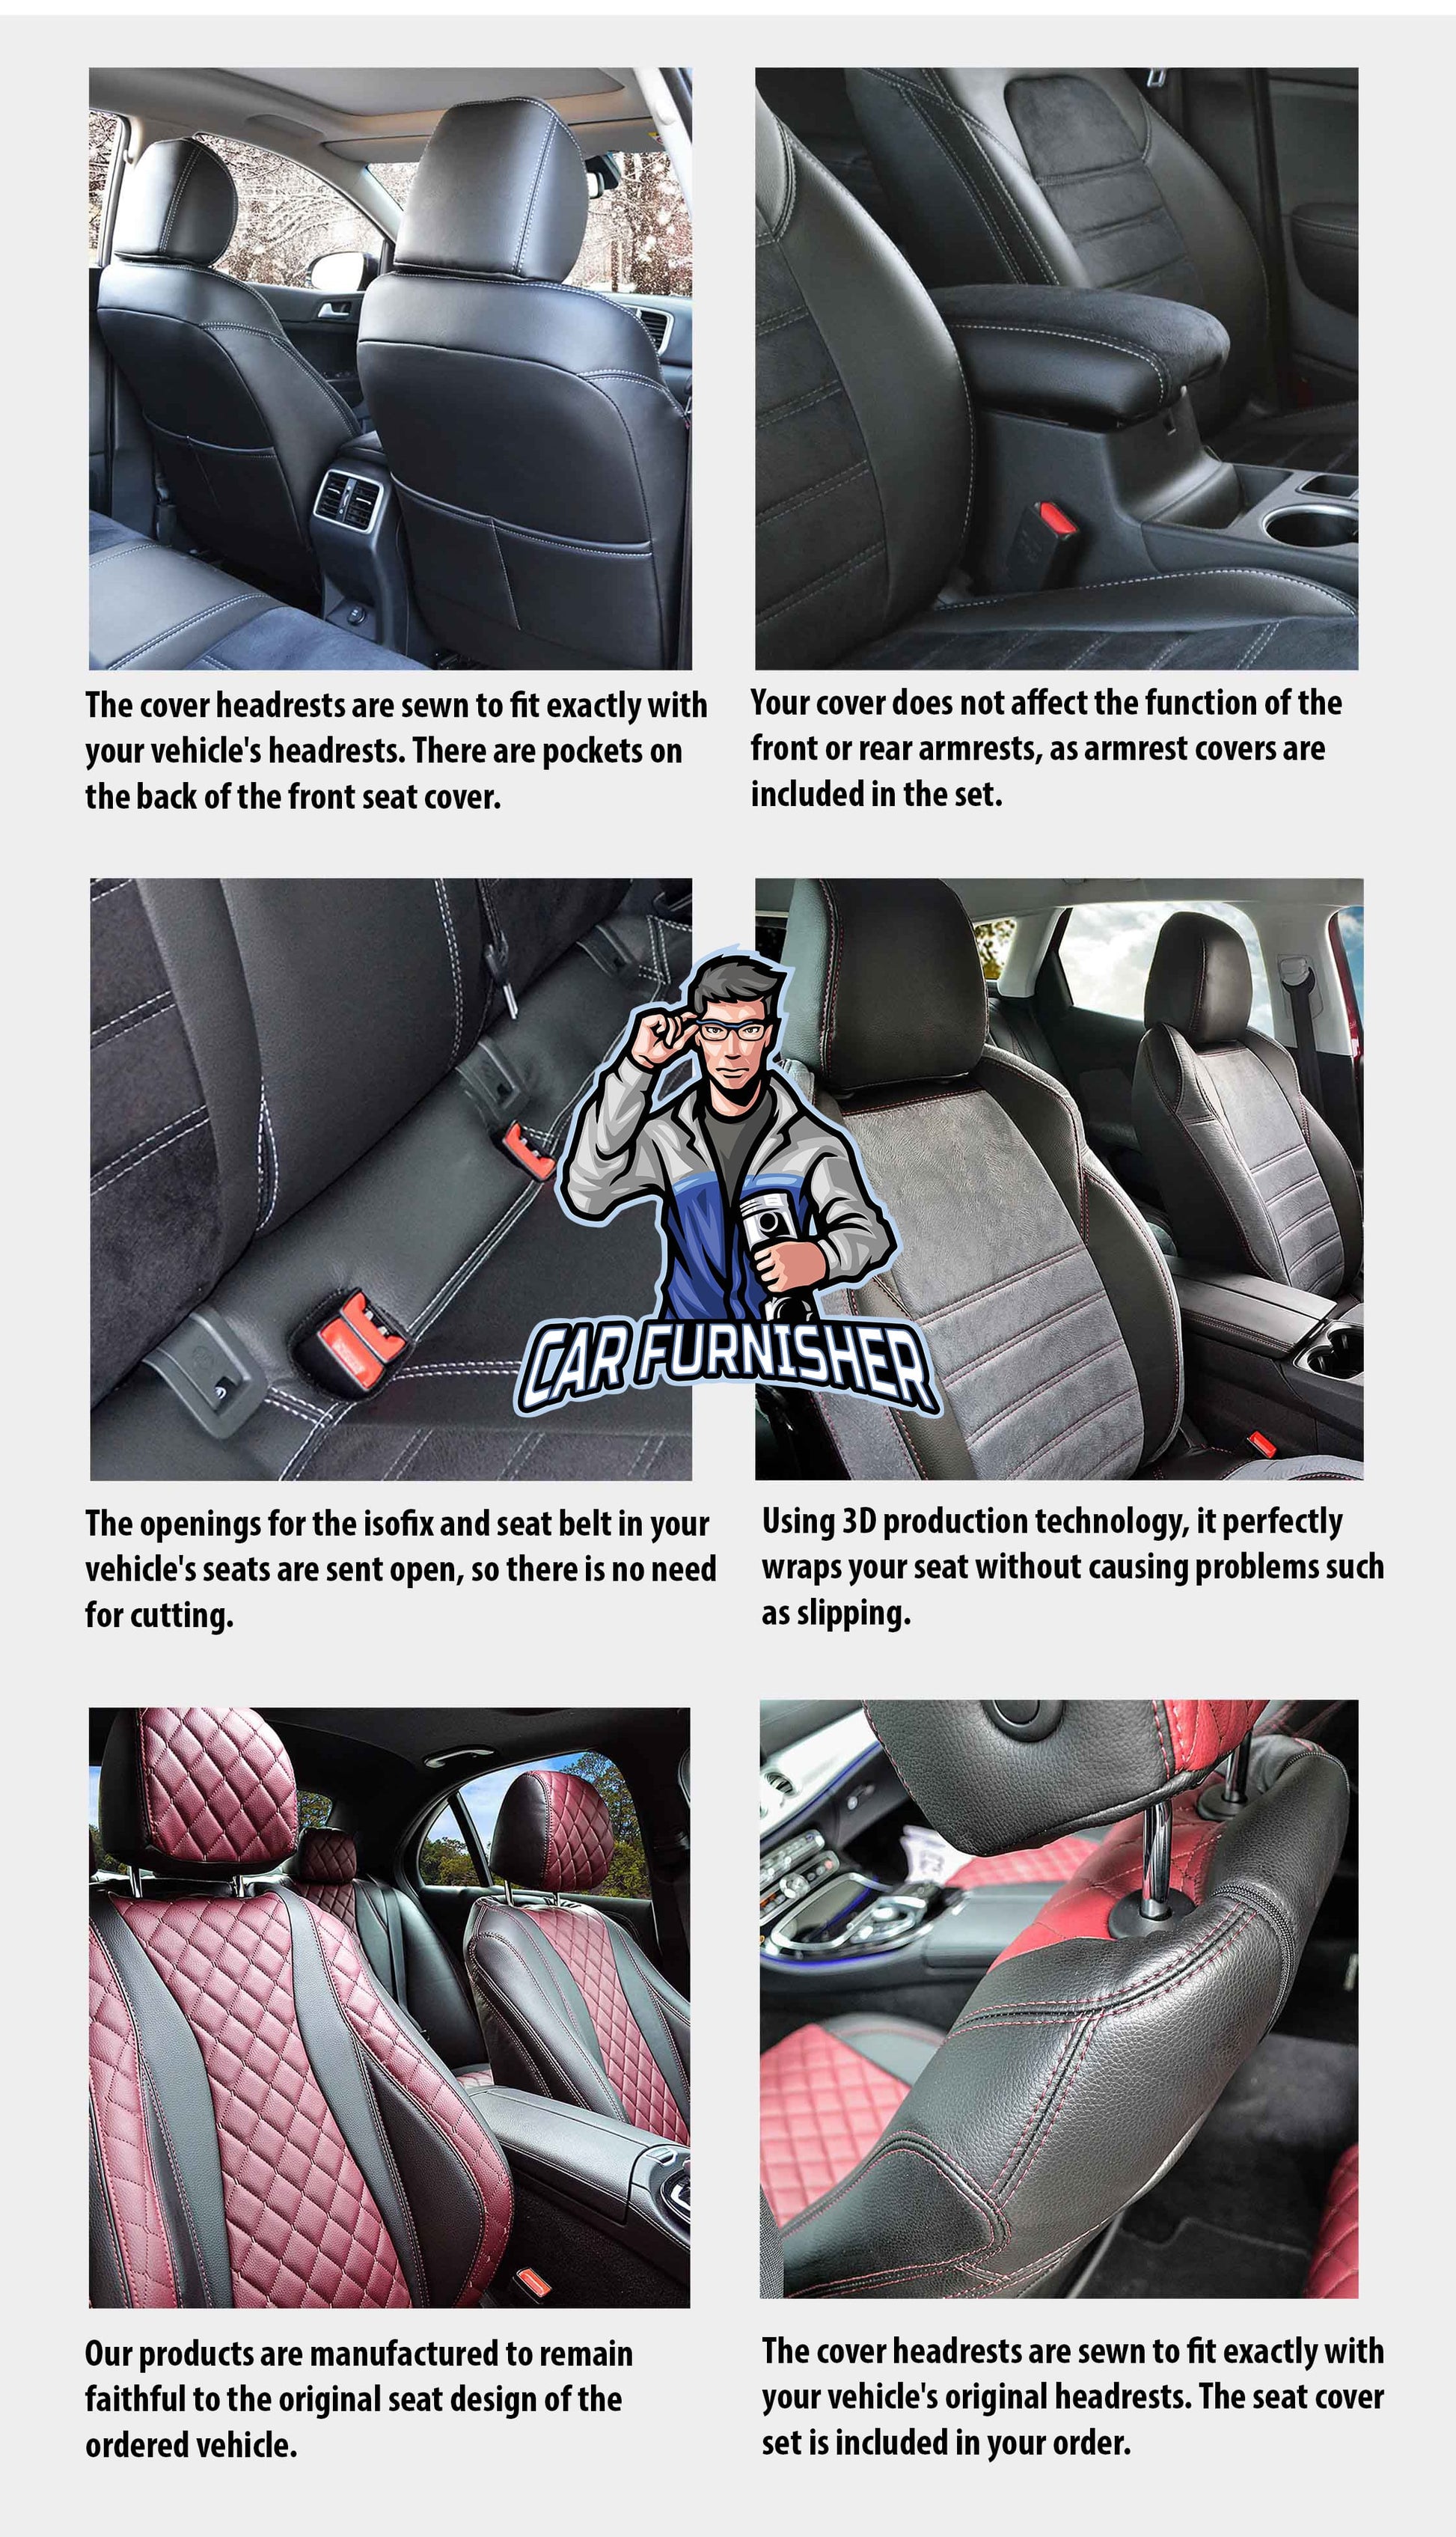 Chevrolet Cruze Car Seat Covers 2009-2016 Paris Design Red Full Set (5 Seats + Handrest) Leather & Fabric